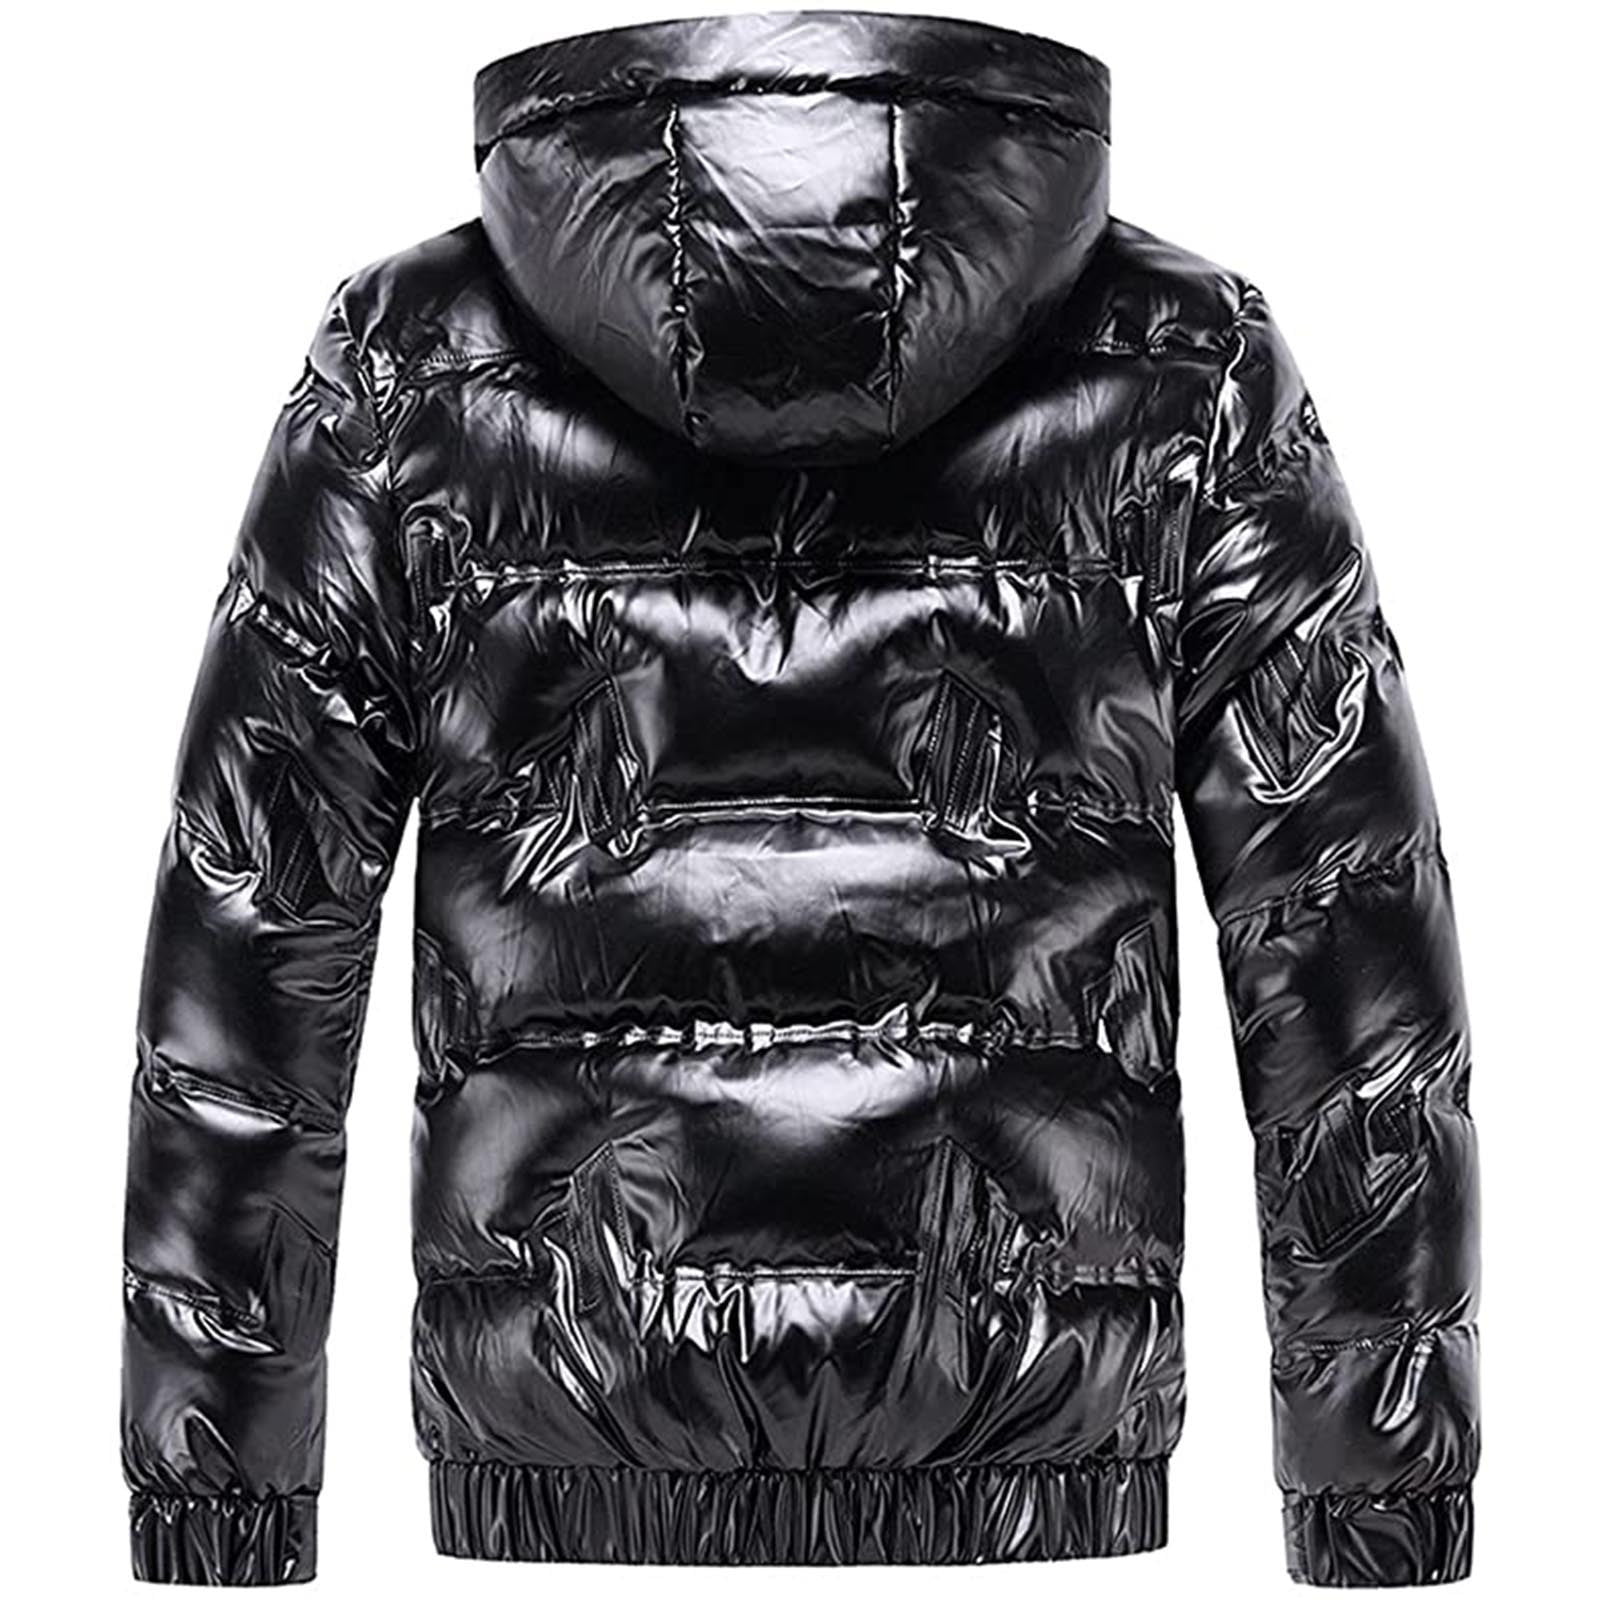 Men's Hooded Sport Coat Shiny Hooded Reflective Down Jacket Cotton